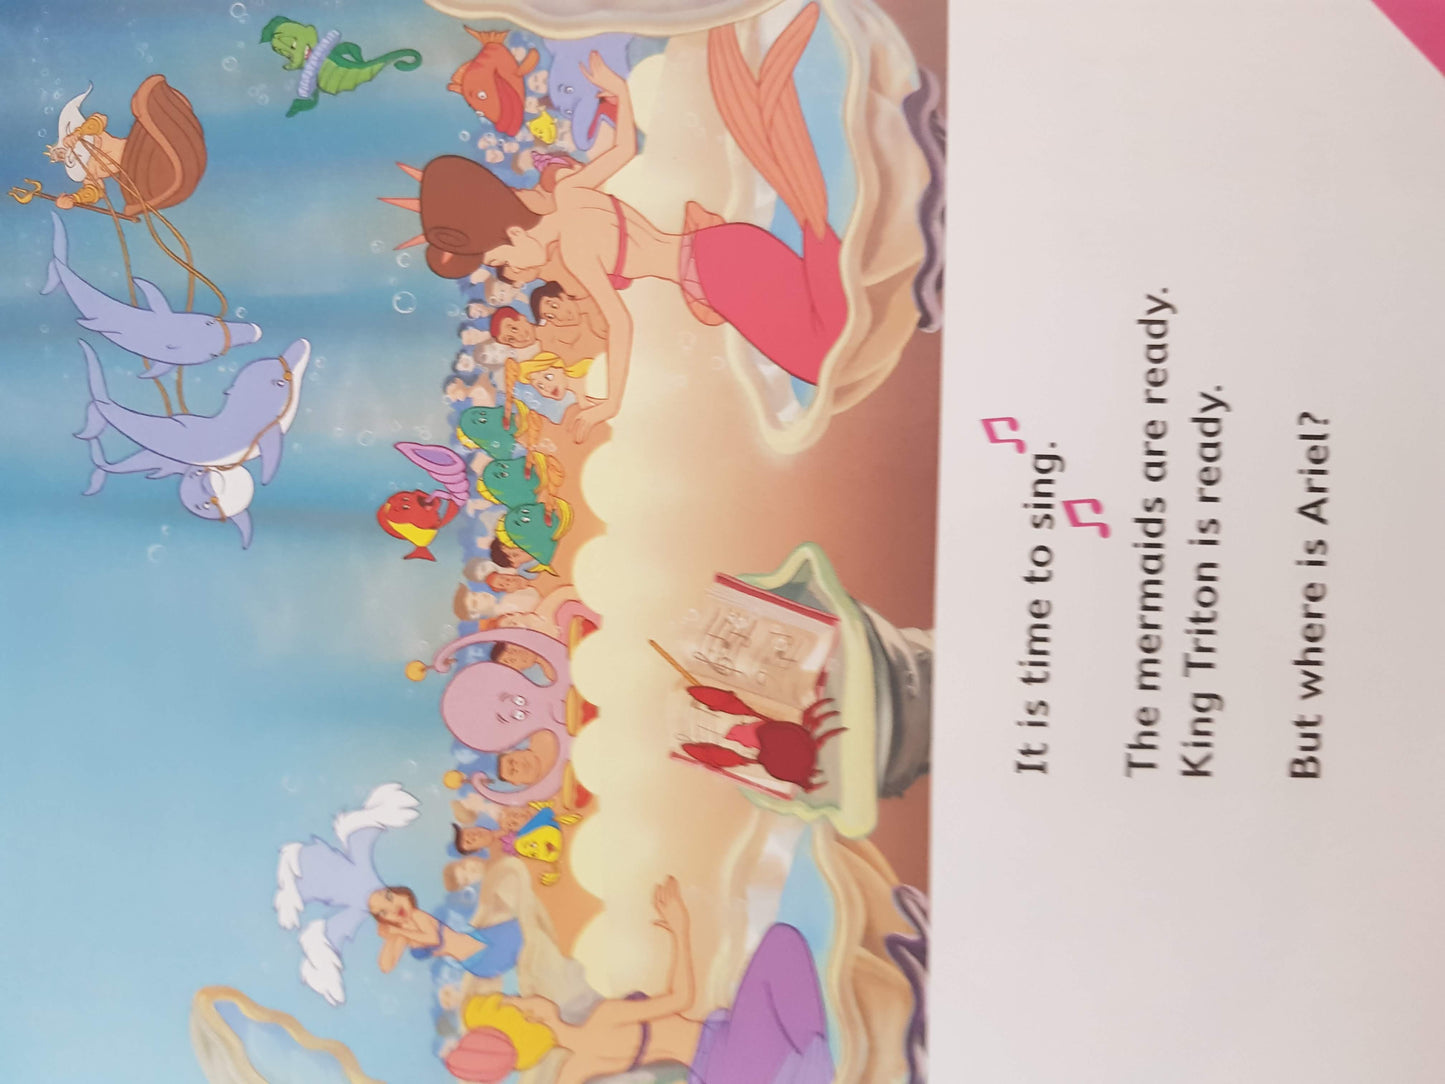 Ariel and the prince Very Good,English Disney  (6088029208761)